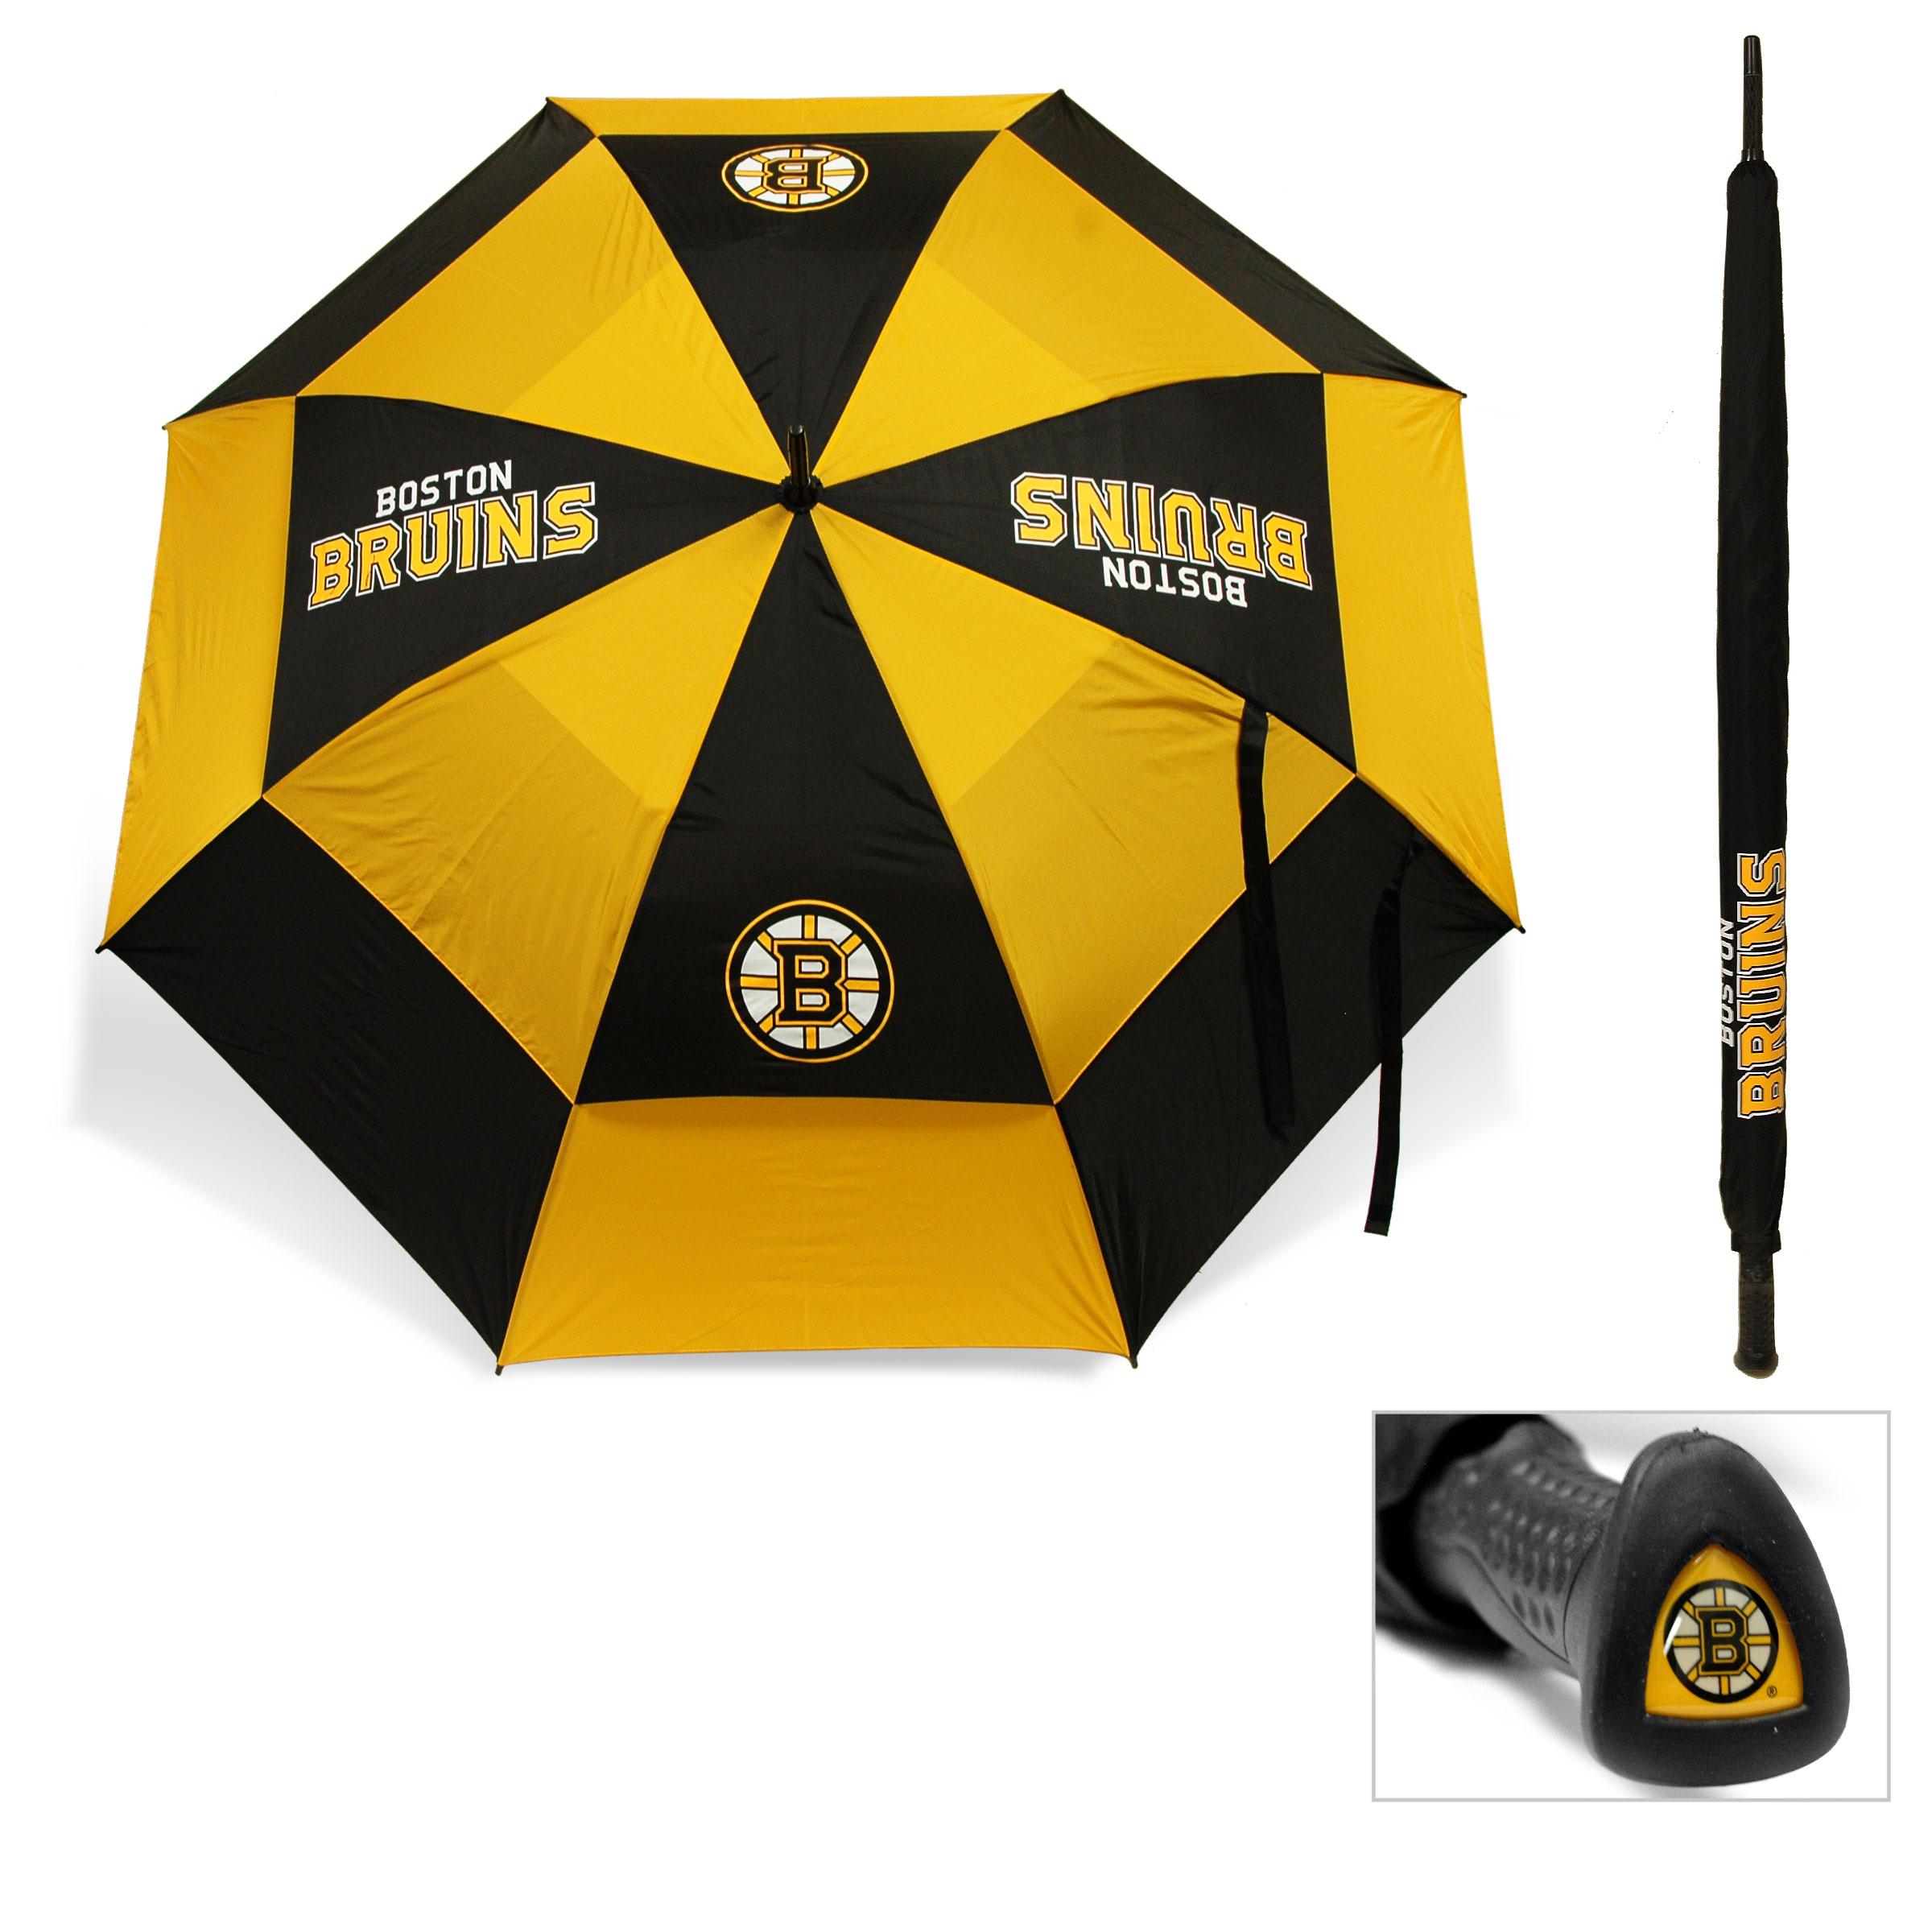 Boston Bruins Umbrella